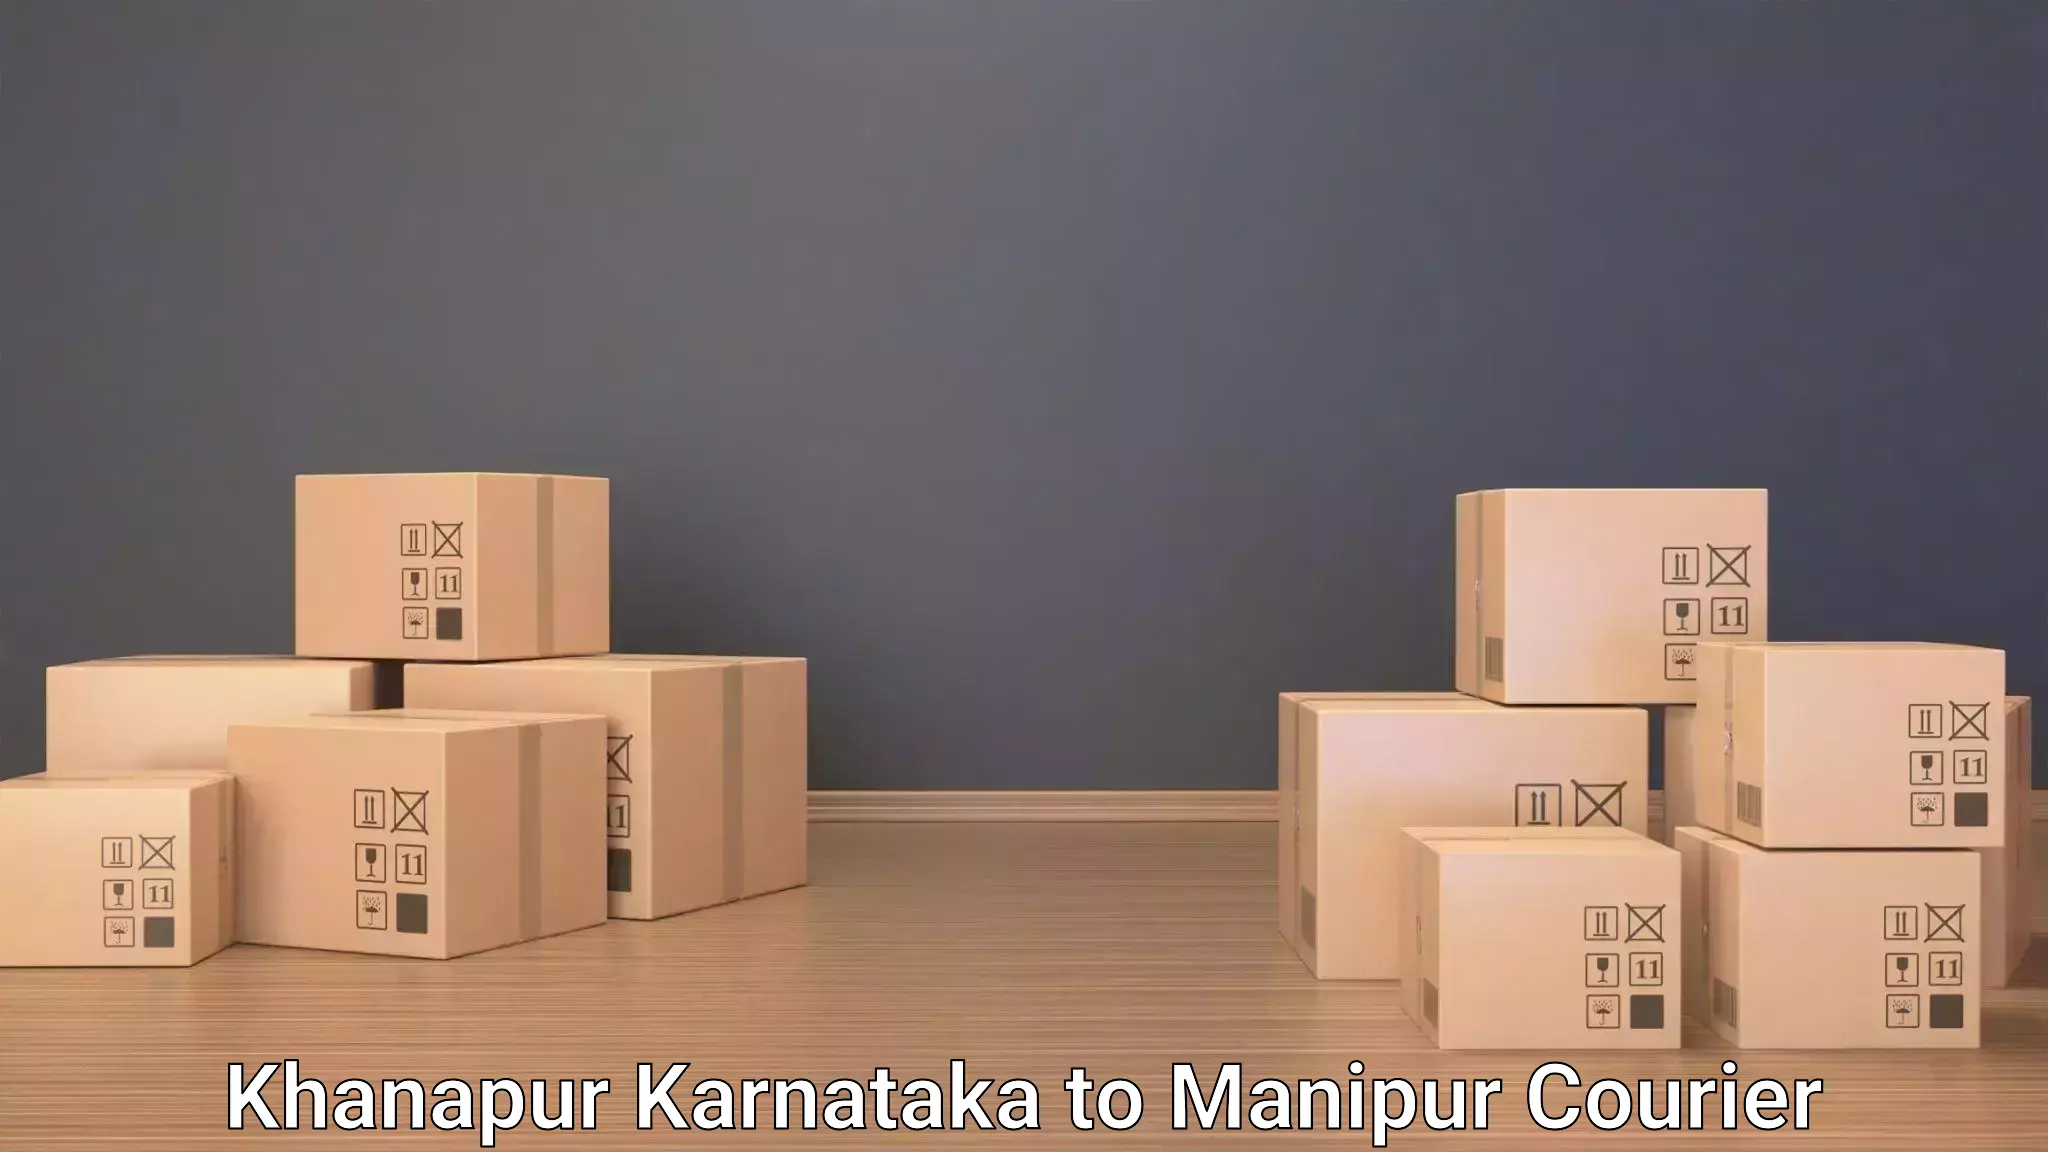 Luggage delivery system Khanapur Karnataka to Manipur